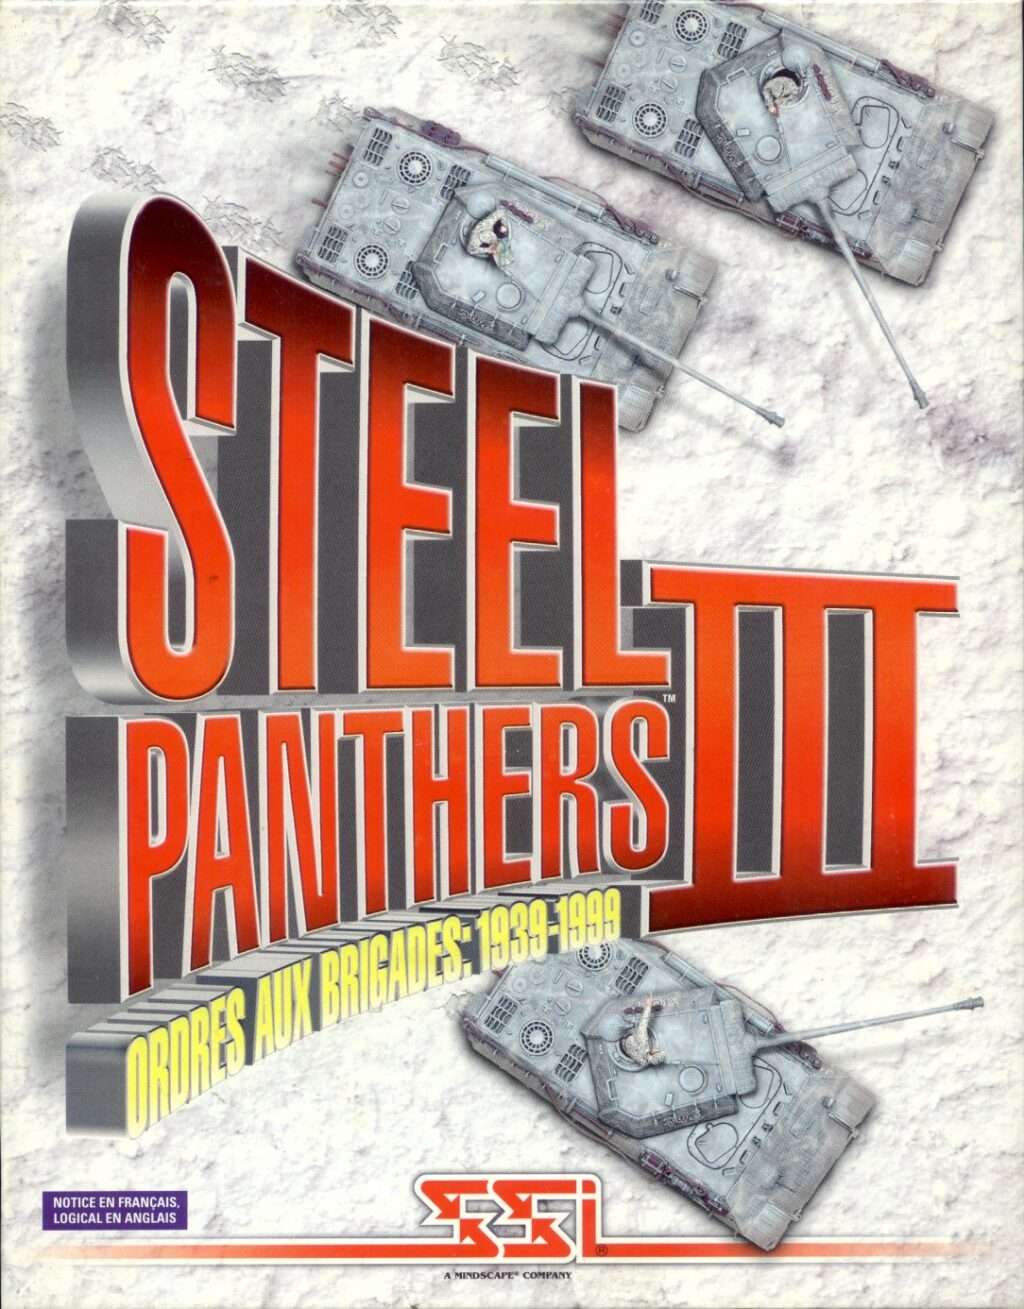 Steel Panthers (série